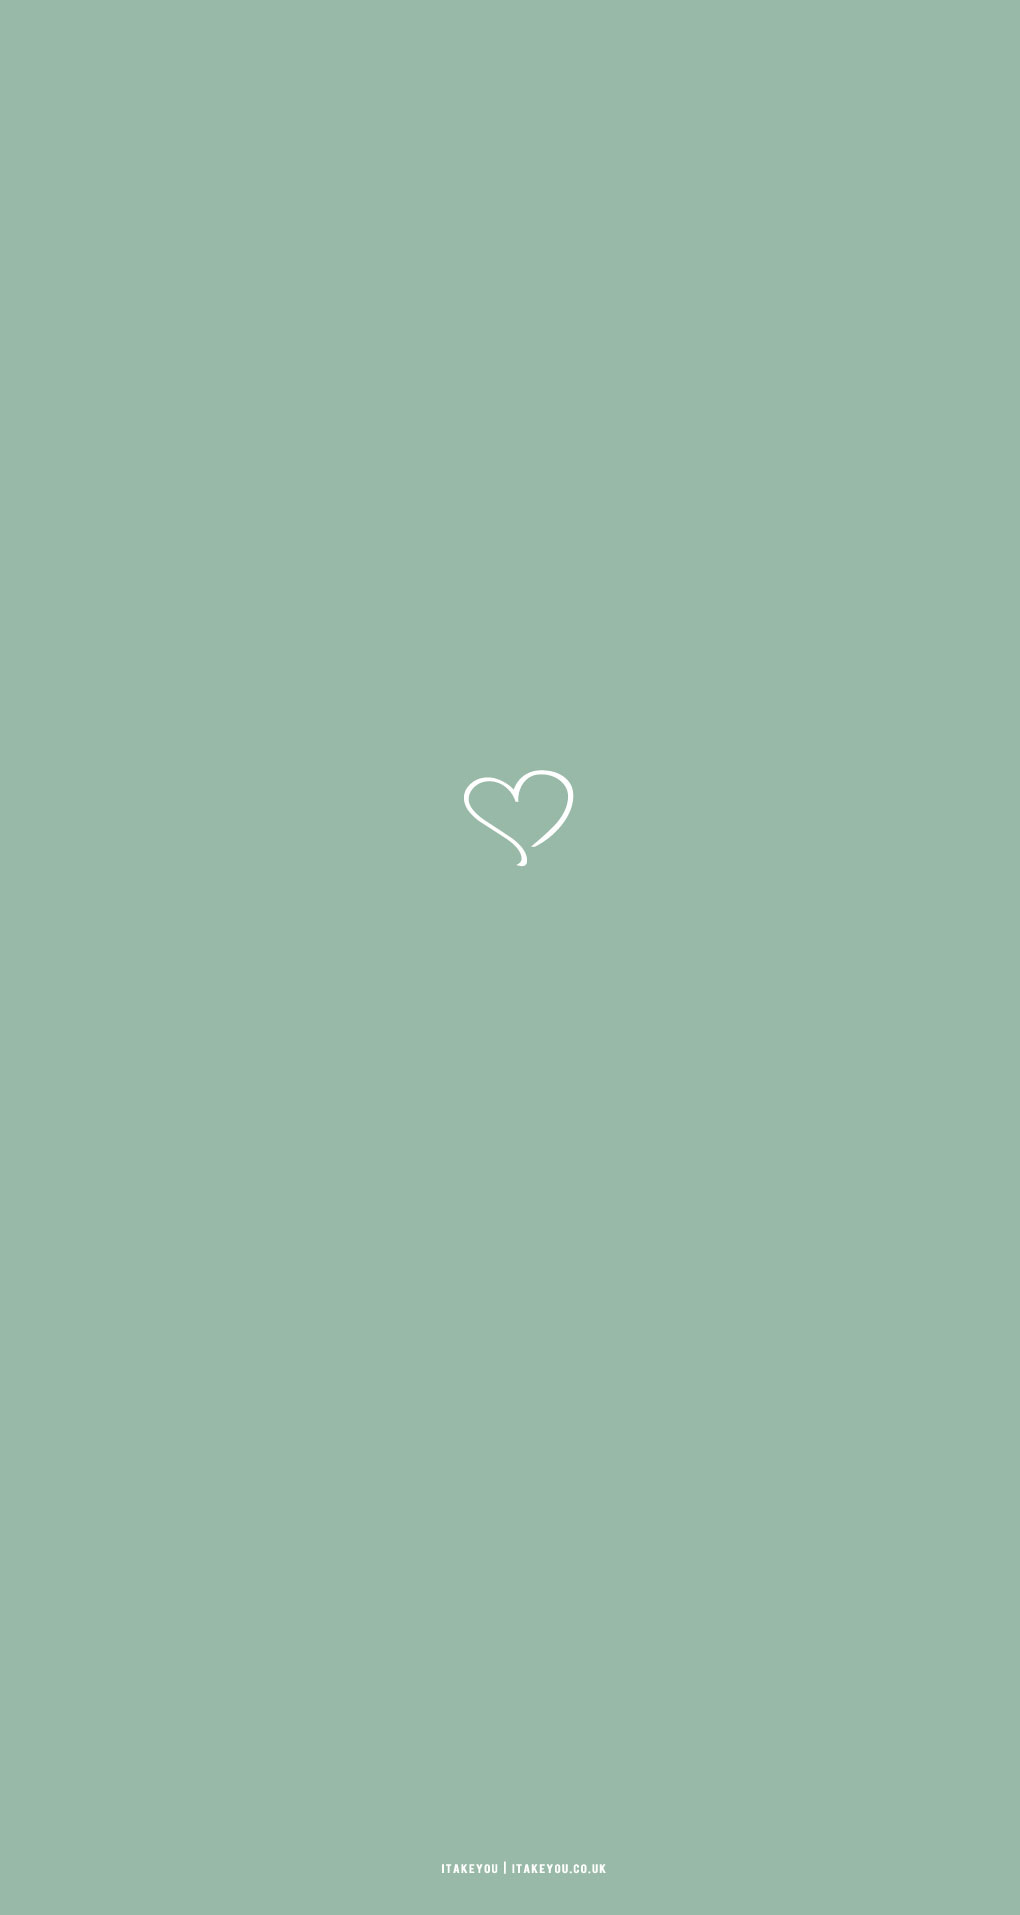 Sage Green Minimalist Wallpaper For Phone Cute Heart I Take